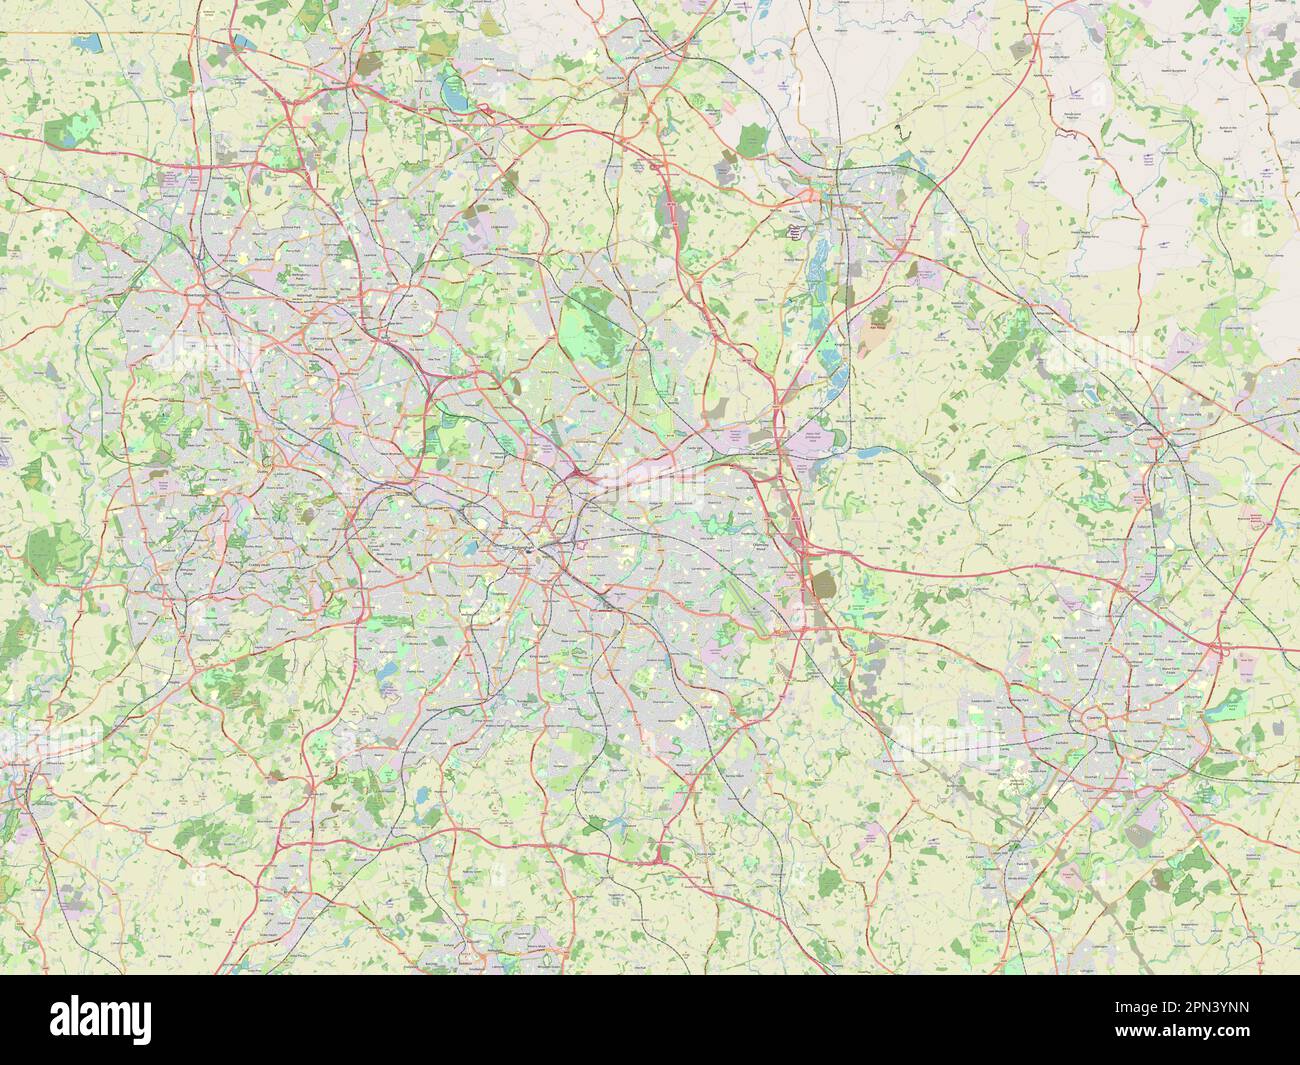 West Midlands Combined Authority, regione dell'Inghilterra - Gran Bretagna. Aprire la mappa stradale Foto Stock